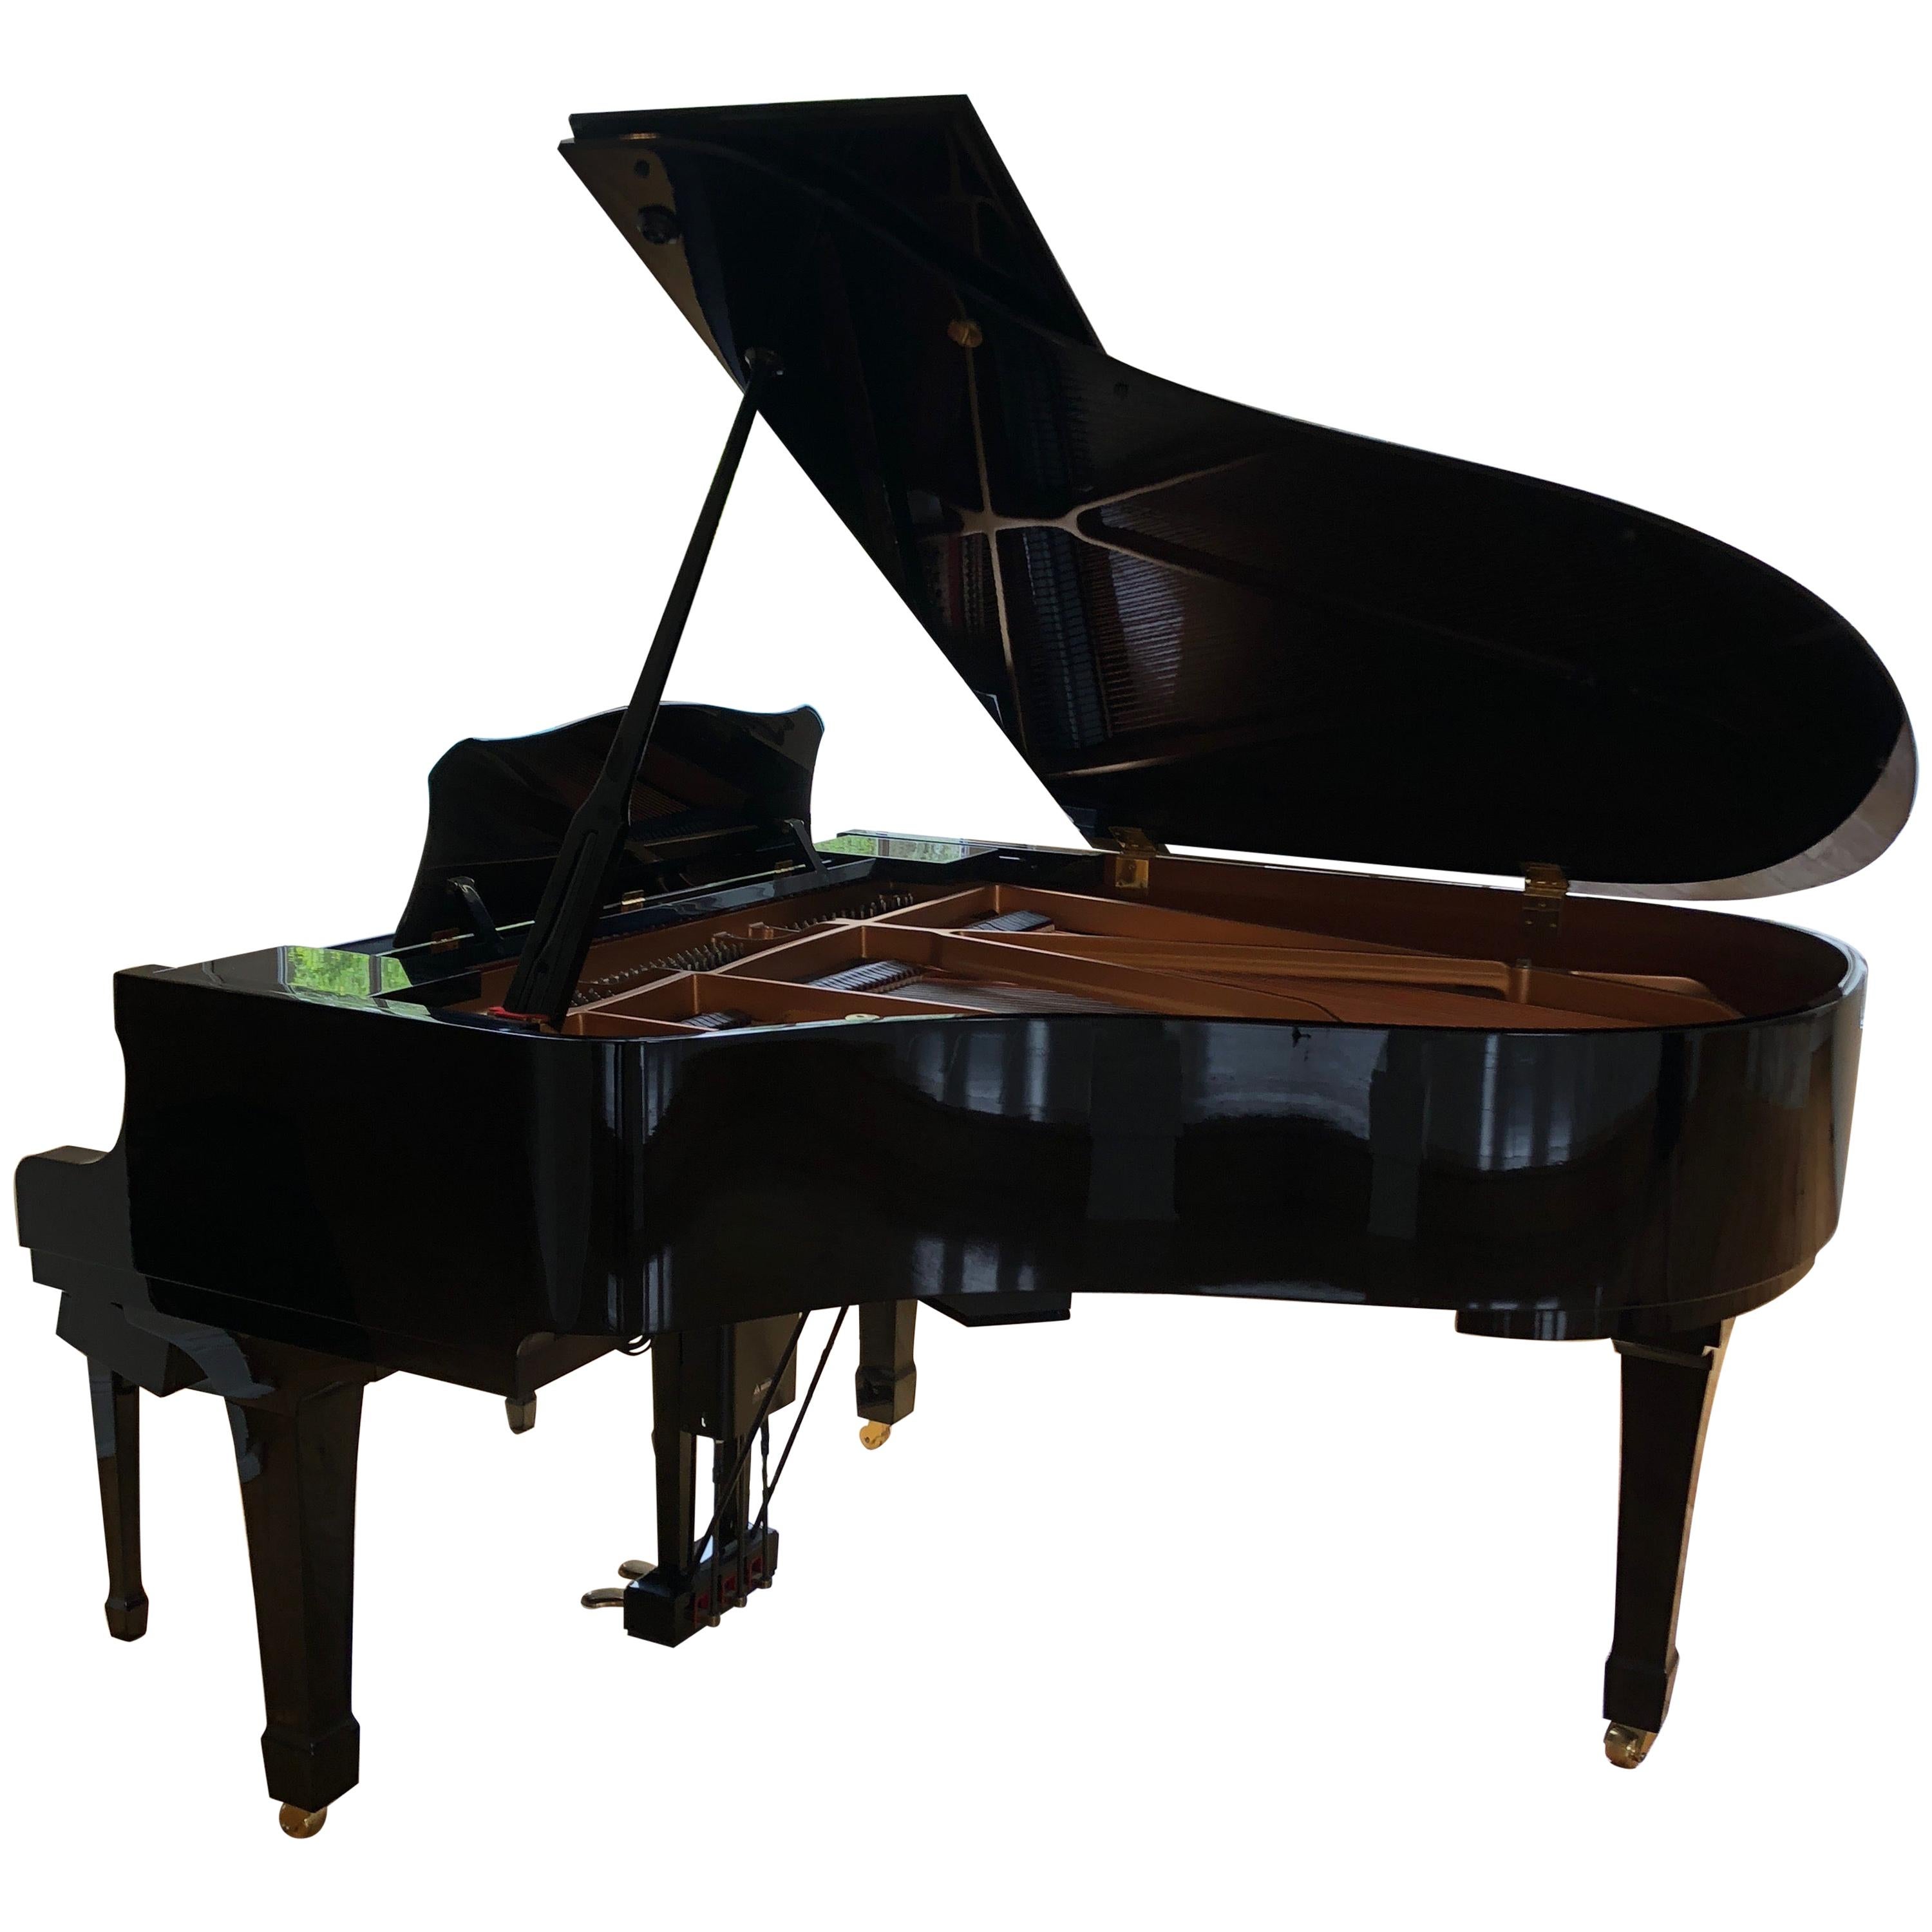 Stunning Baby Grand Disklavier Digital Player Piano by Yamaha